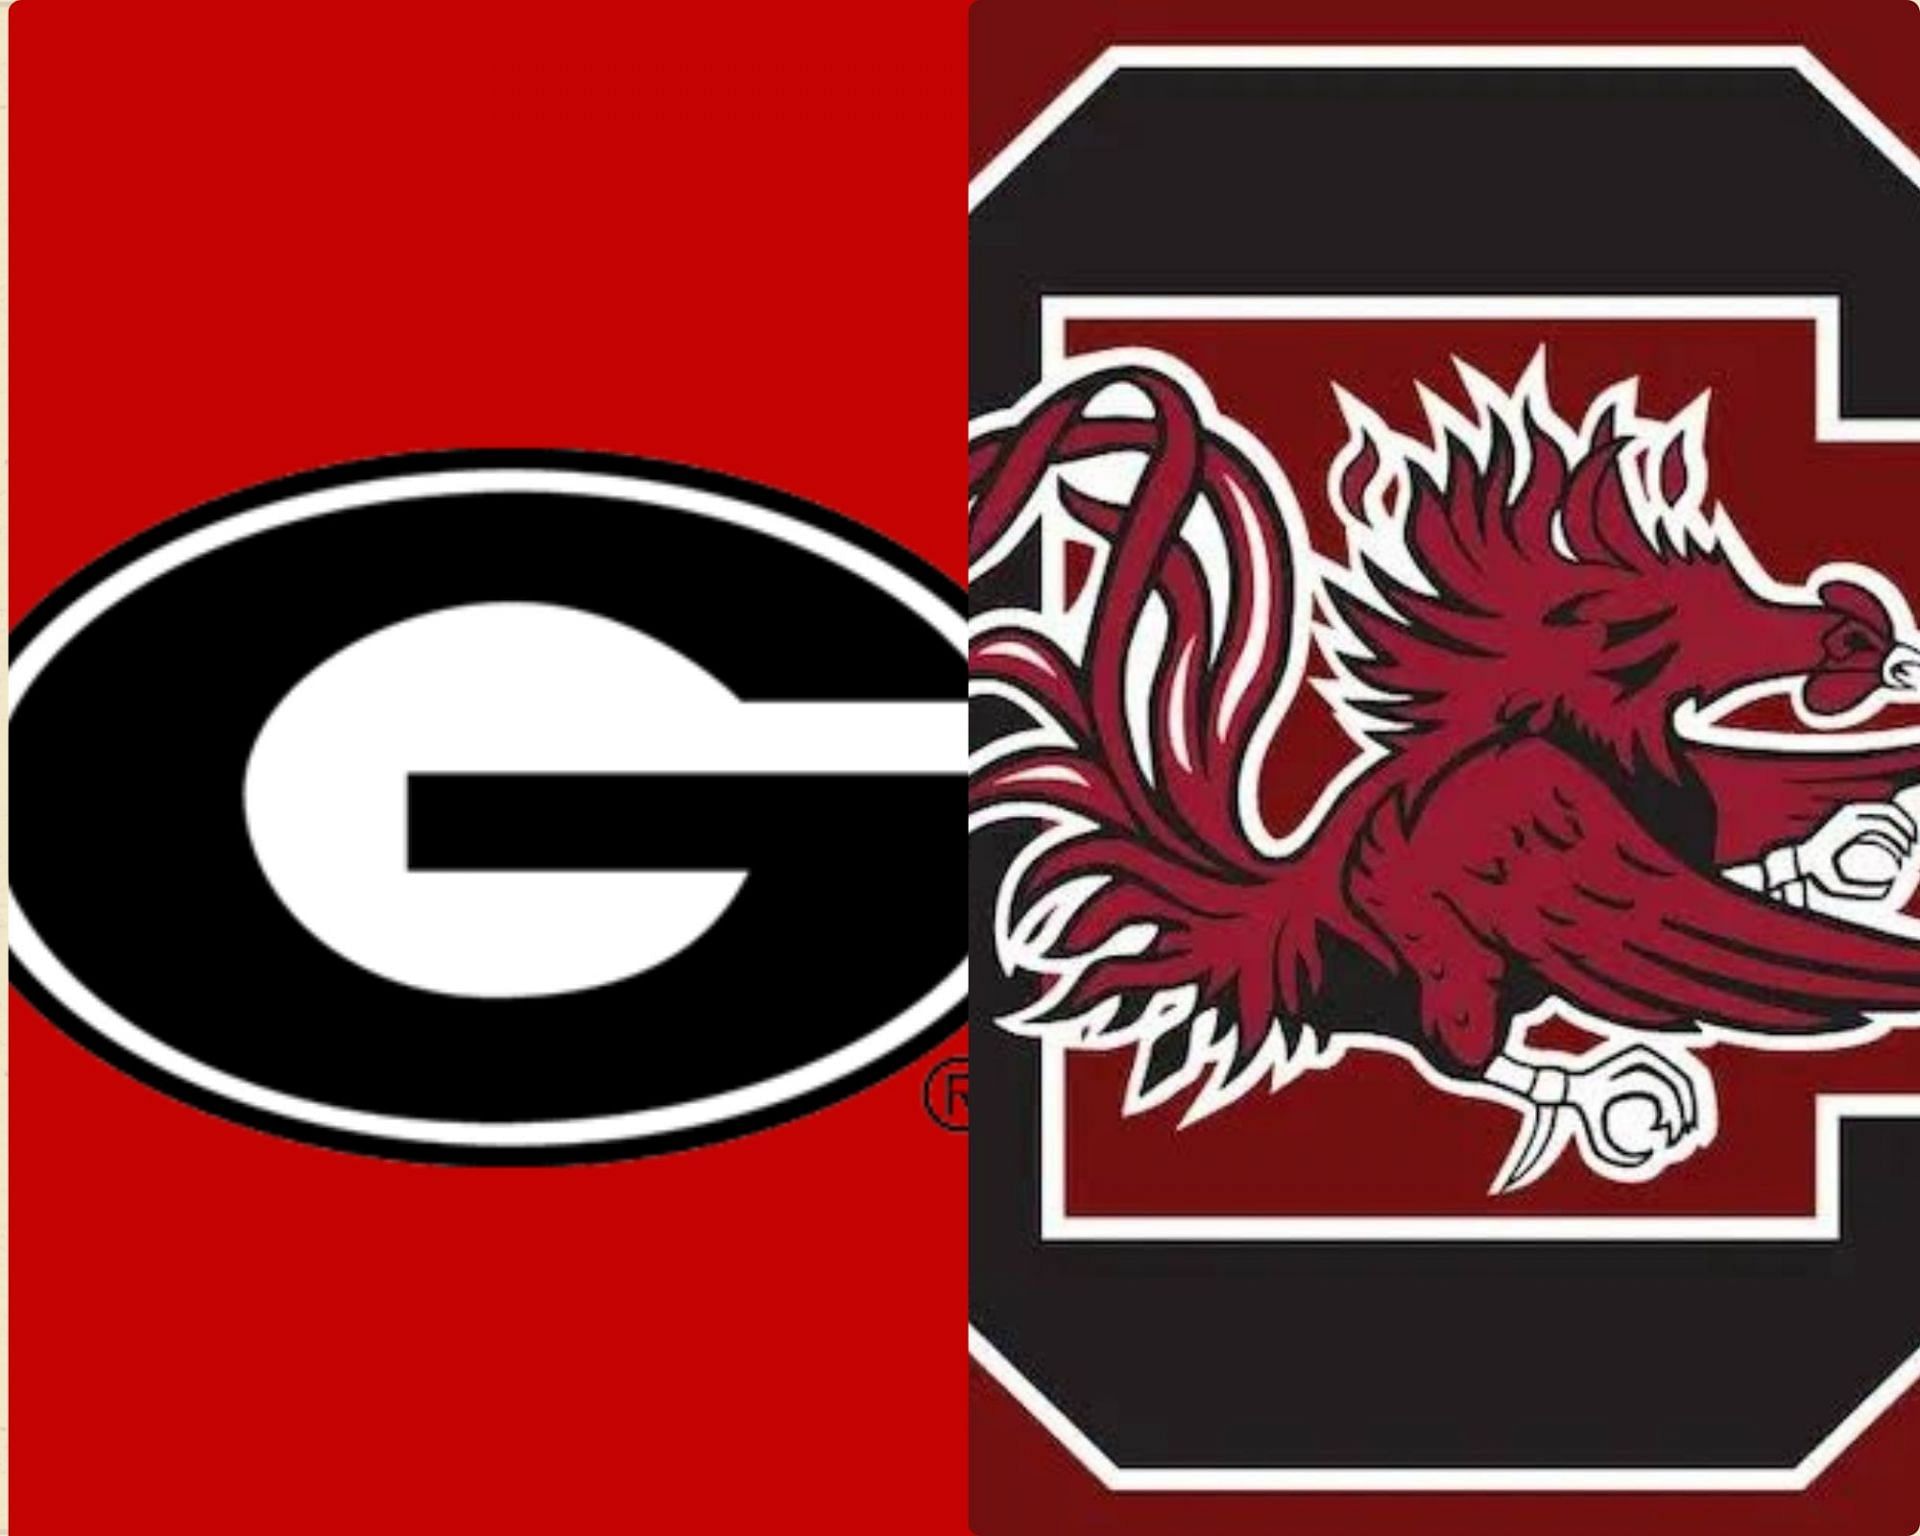 Georgia is set to play South Carolina for week 3